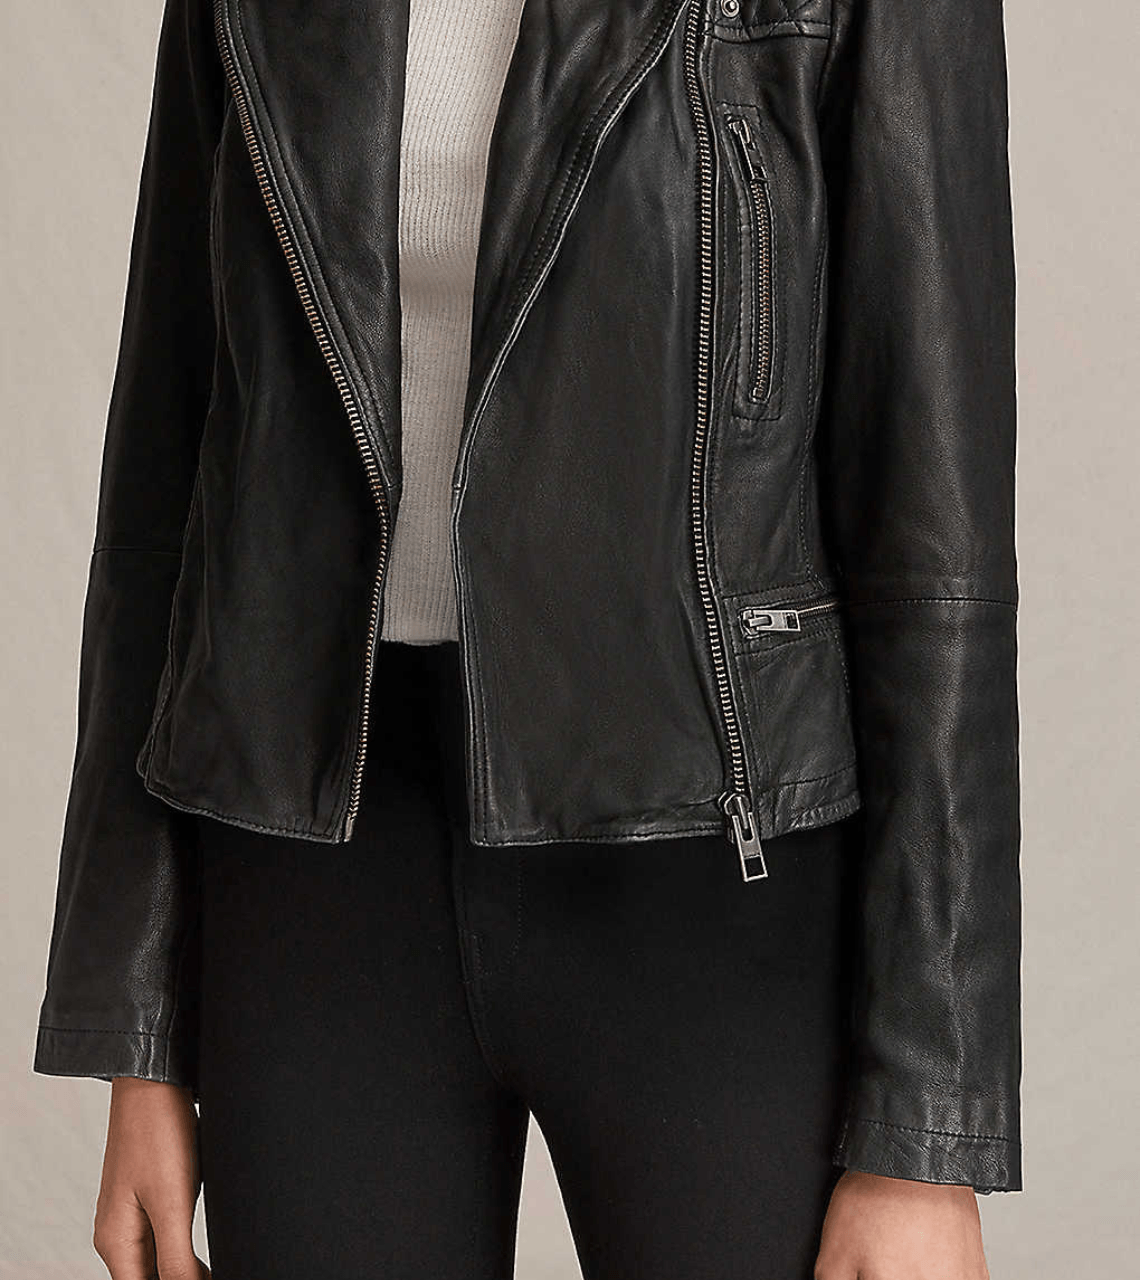  Distressed Women's Black Leather Biker Jacket